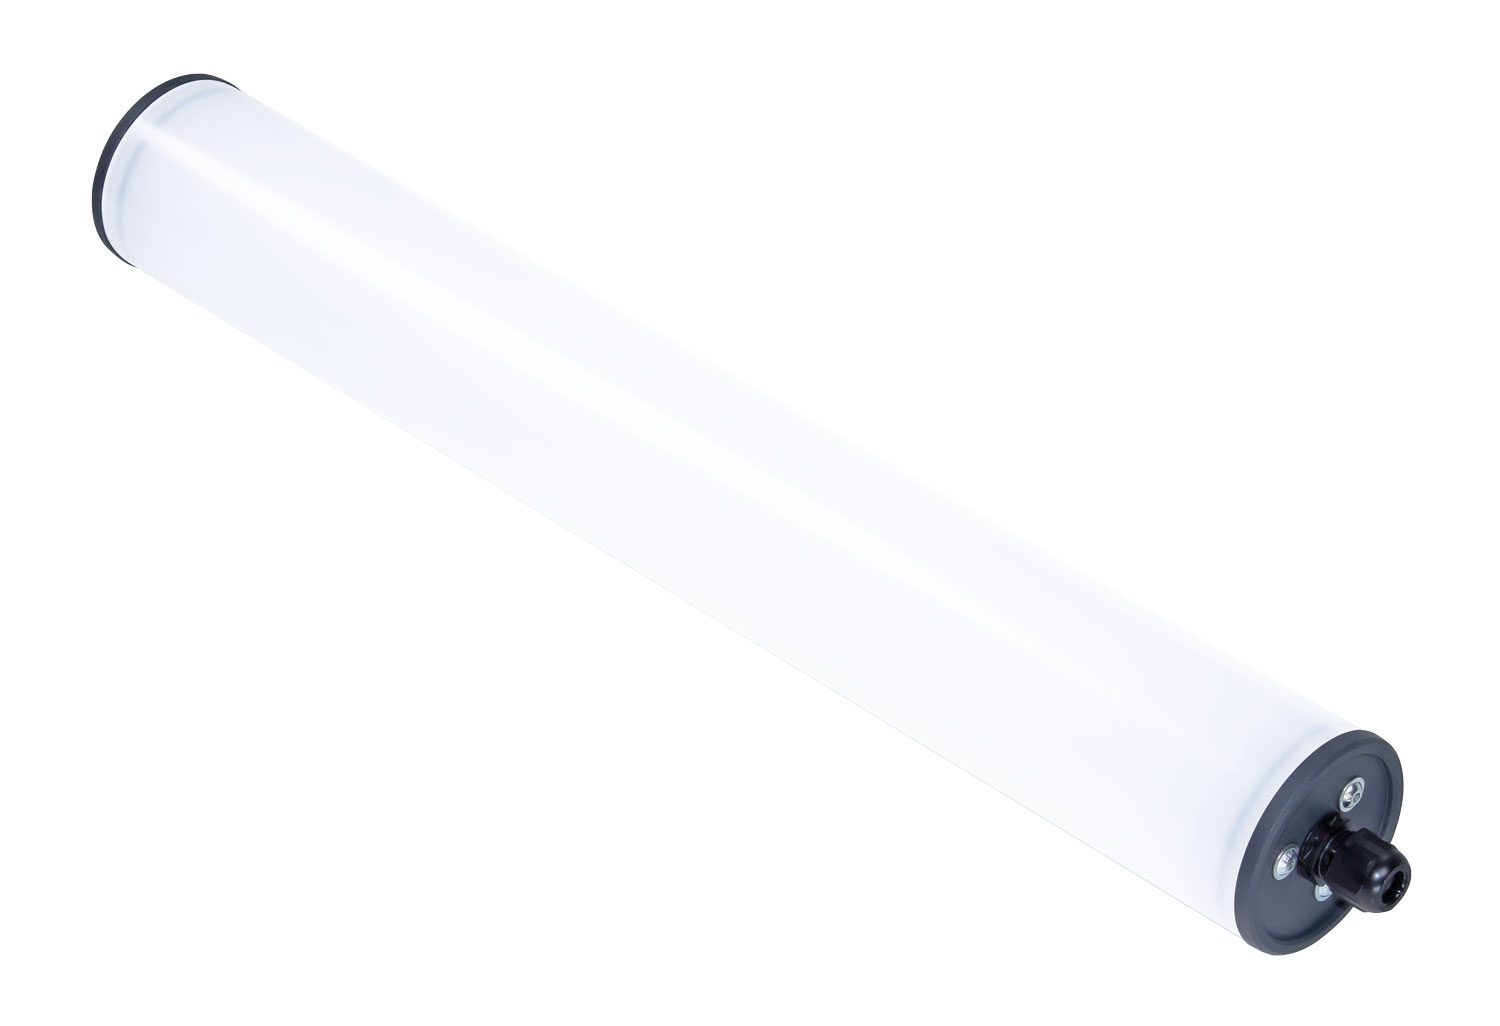 reservering houding ontvangen Werkbanklamp LED2WORK bij Flume technology | Model Opbouwbuislamp INROLED  70 AC ECO, beschermbuis borosilicaat, 125°, 921 mm, 220-240V AC